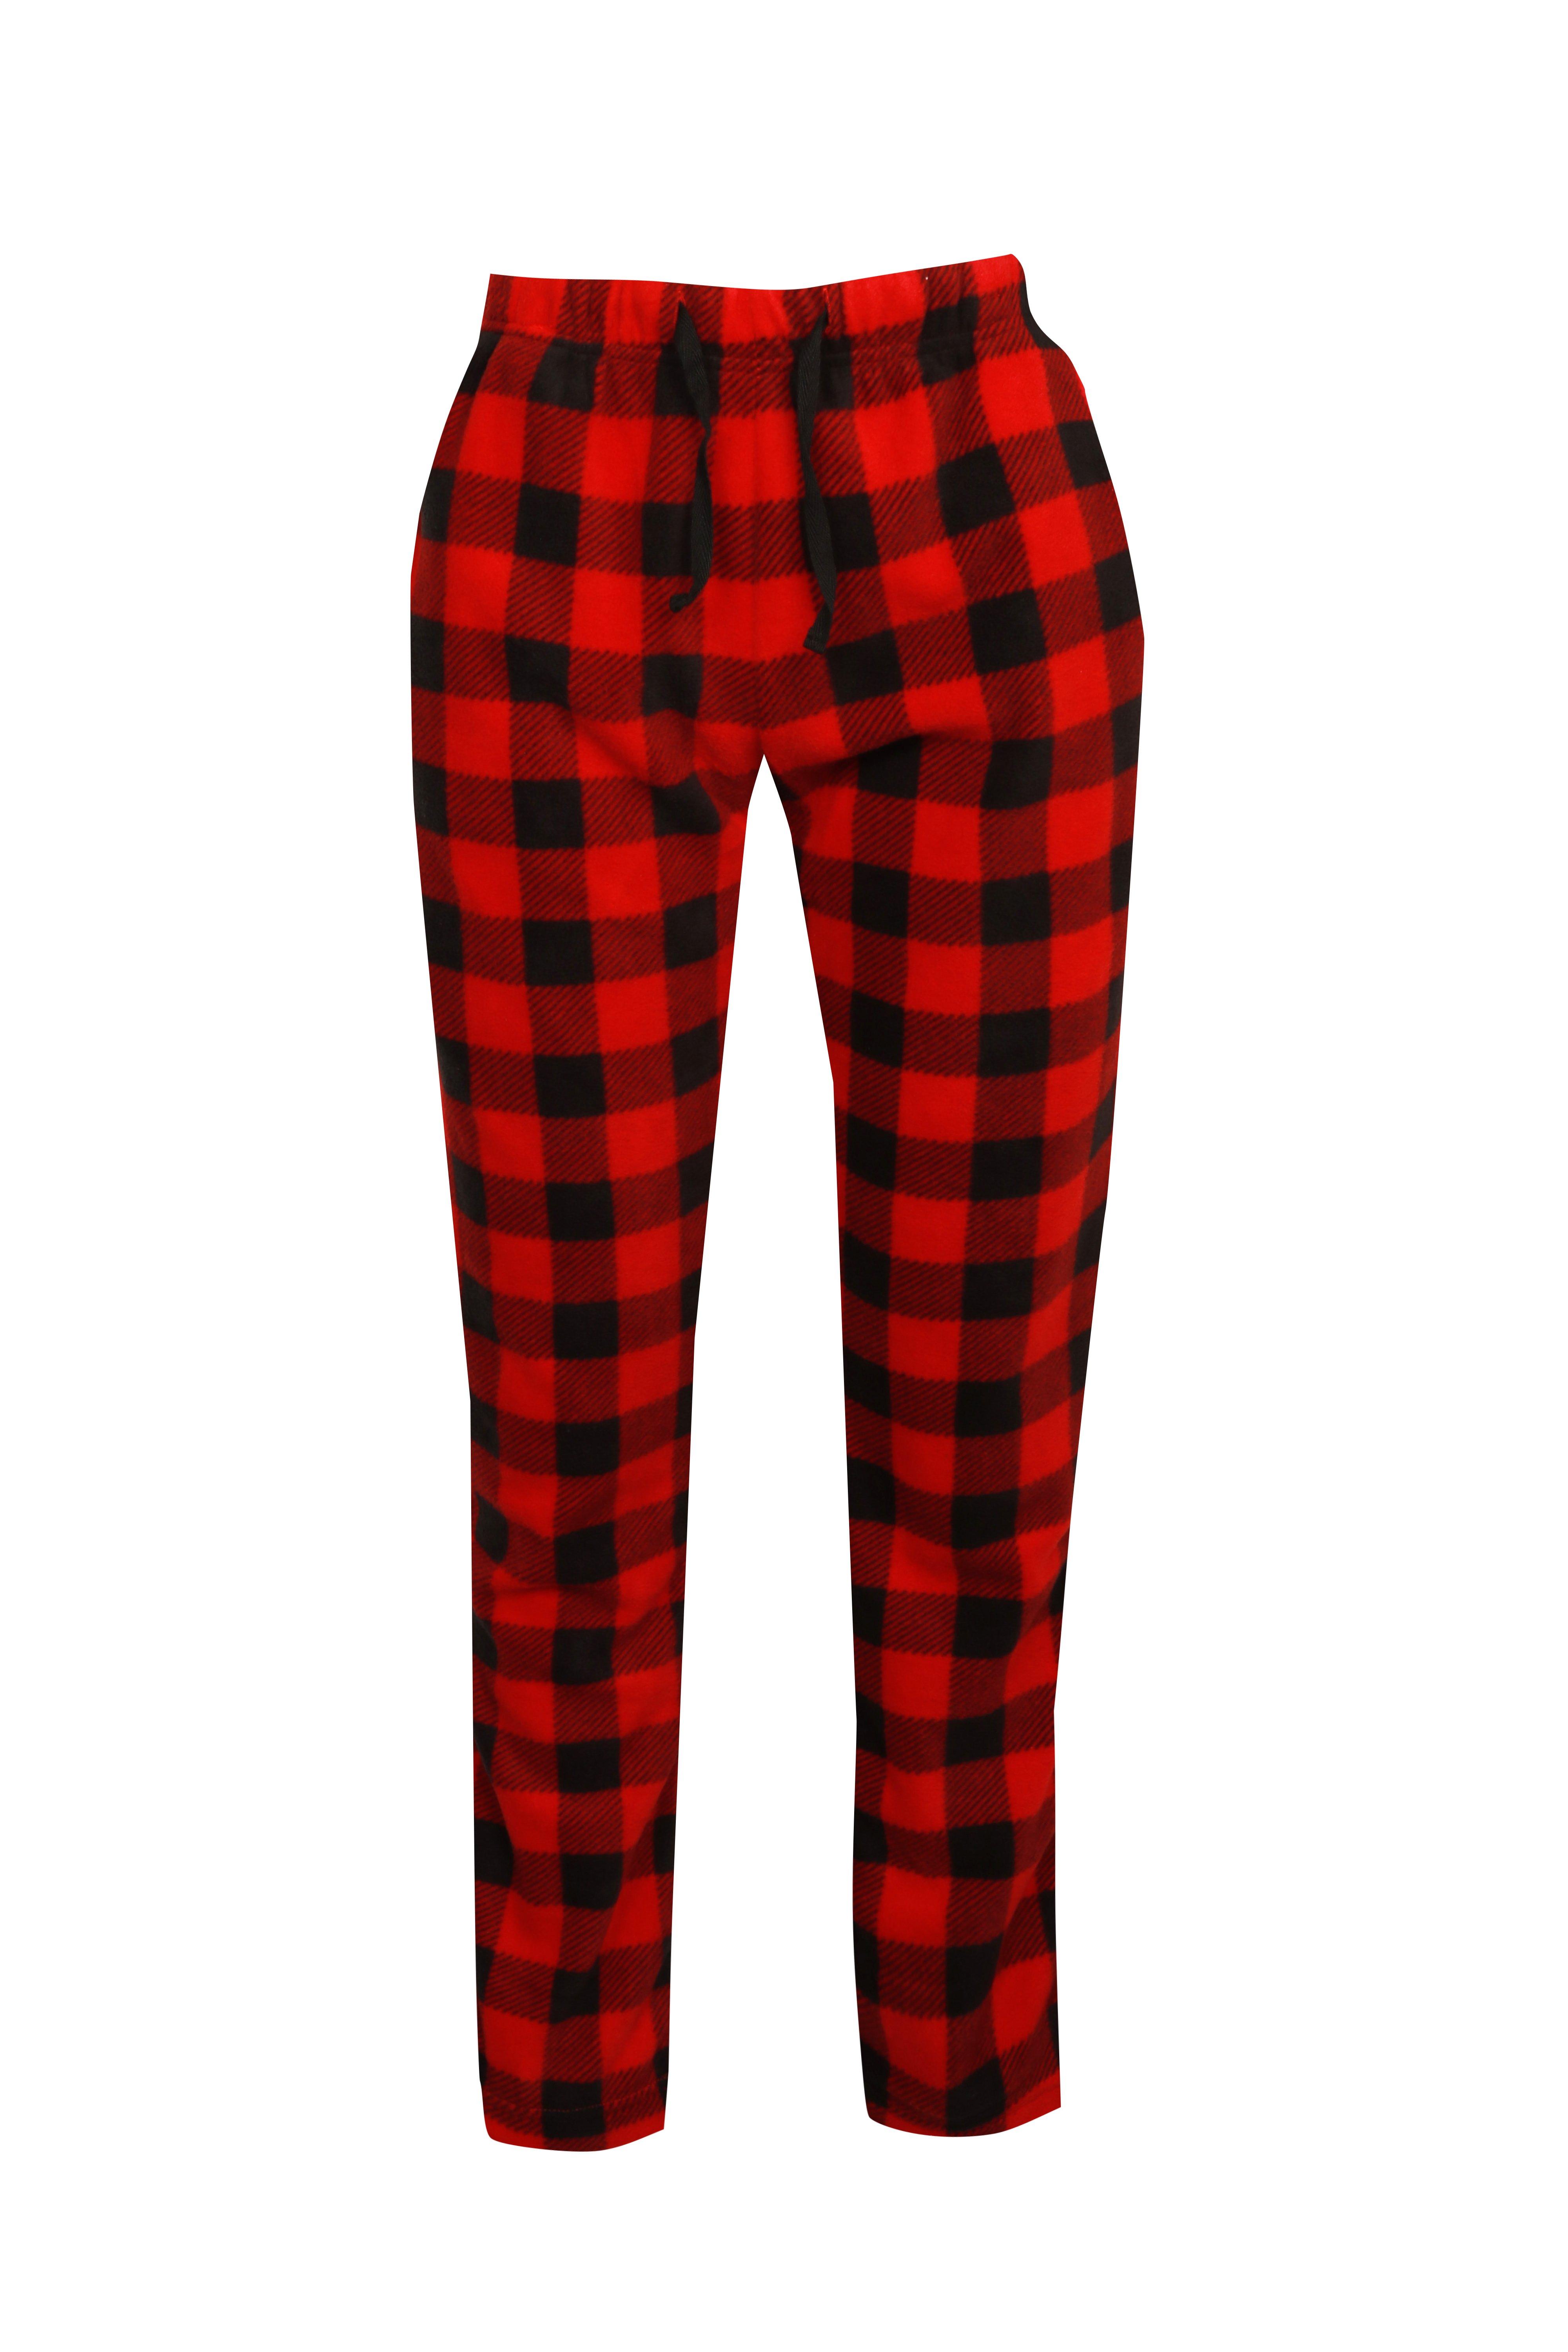 https://media.boohoo.com/i/boohoo/mzz68490_red_xl_2/male-red-black-and-red-checked-fleece-pyjama-pants